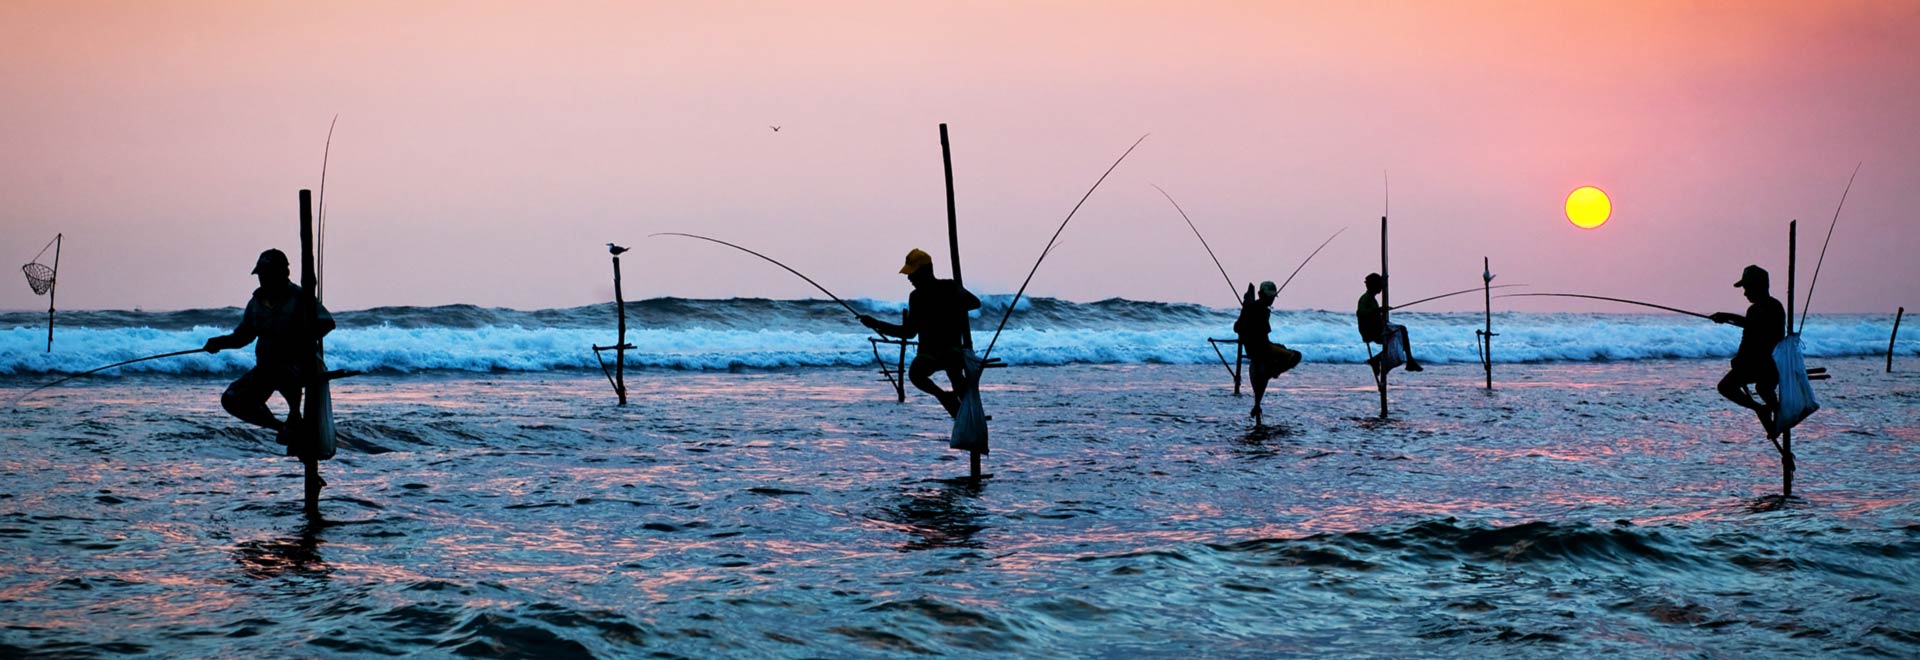 Asia Sri Lanka Galle Fisherman MH